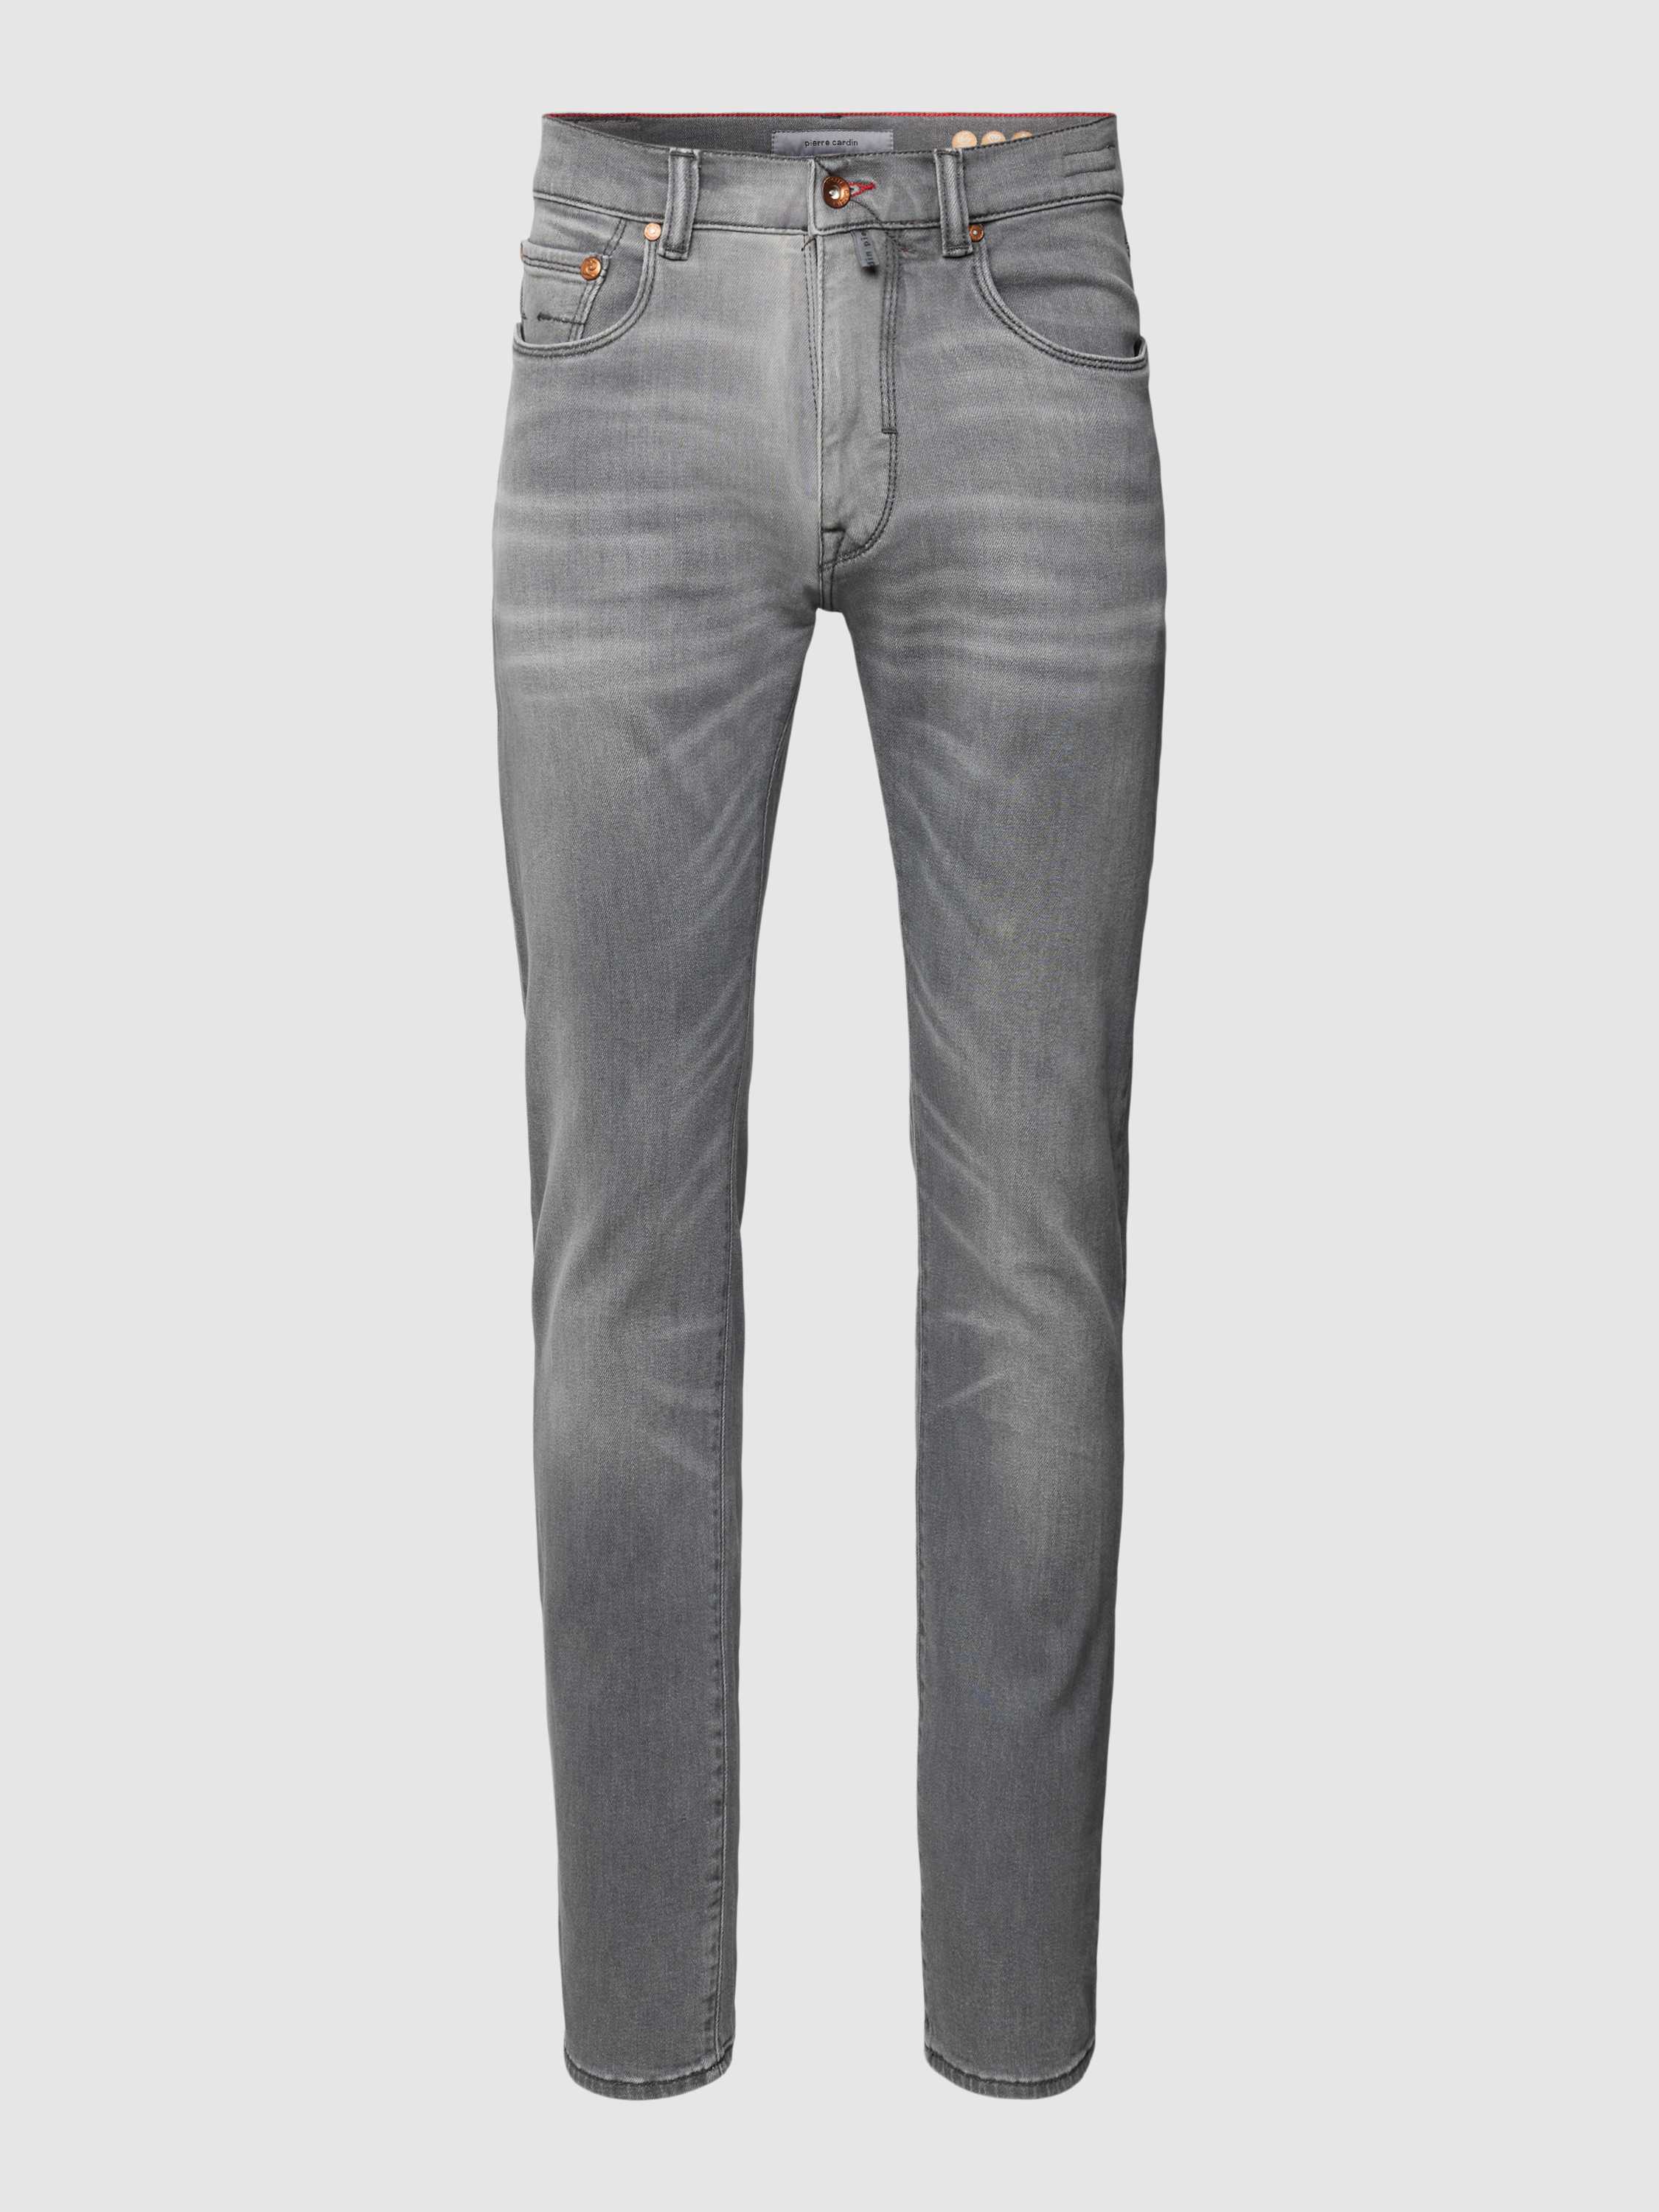 Tapered Fit Jeans im 5-Pocket-Design Modell 'Lyon'